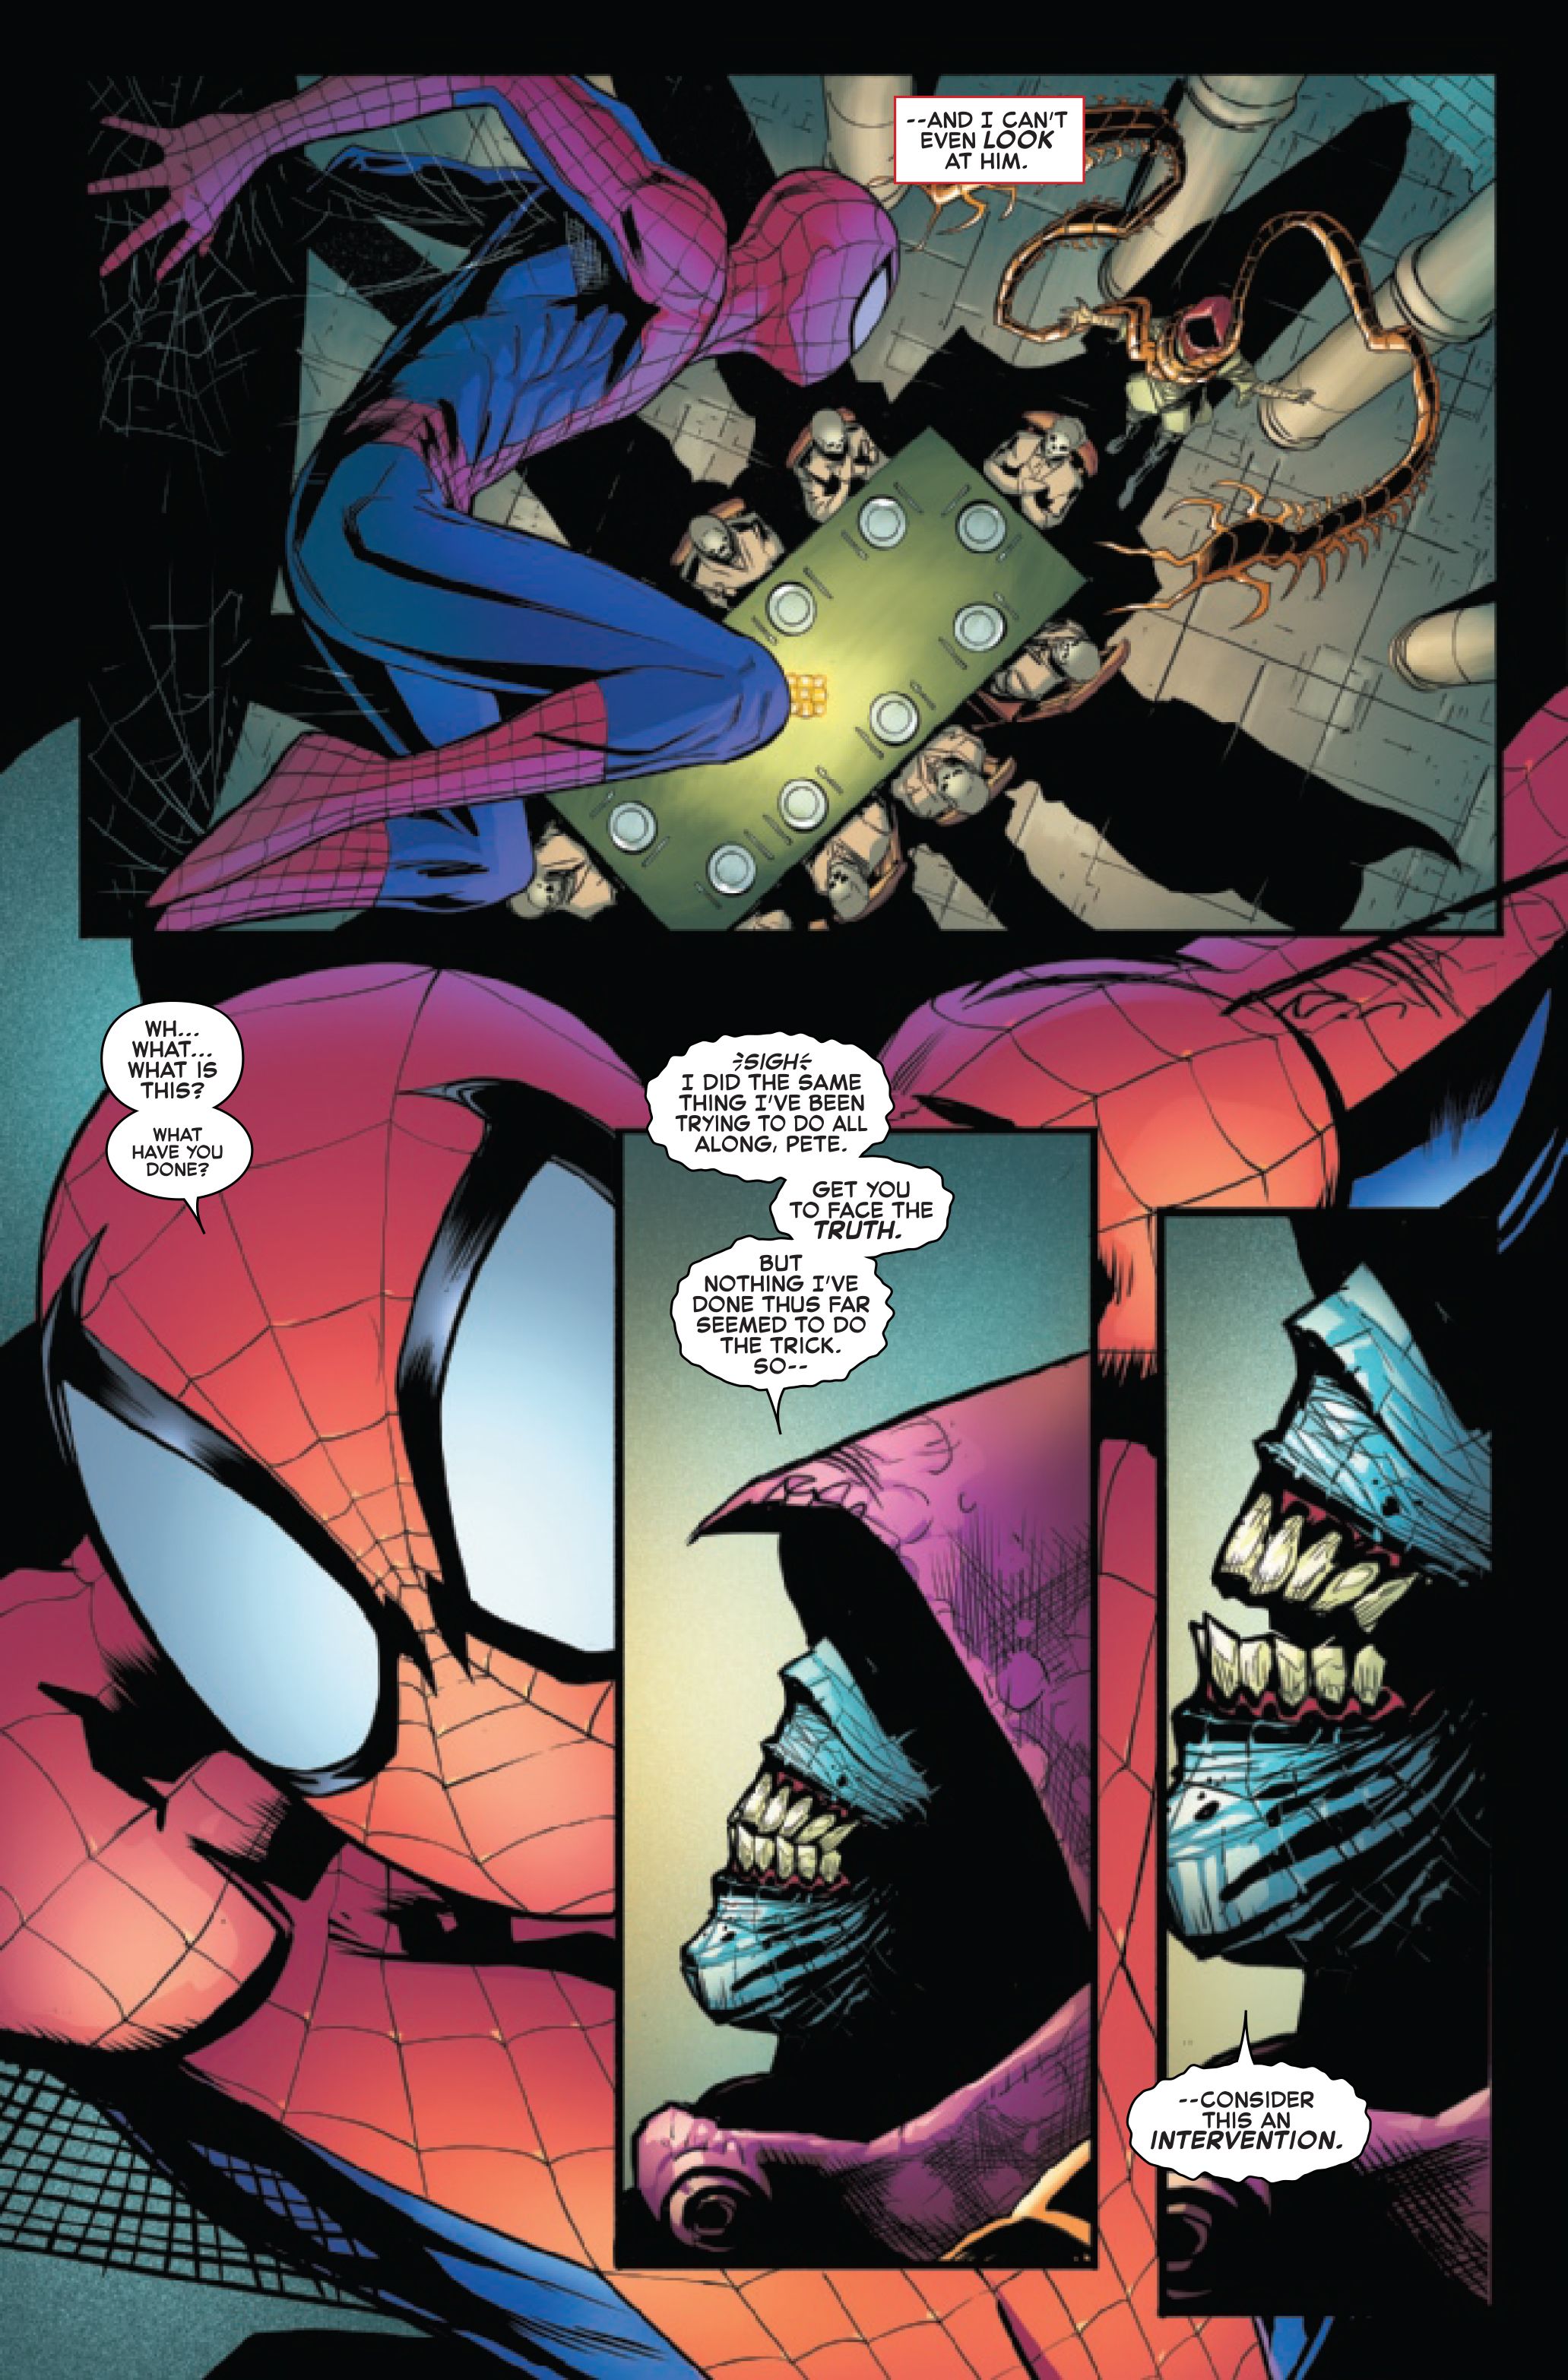 The Amazing Spider-Man #52, by Nick Spencer, Patrick Gleason, Edgar Delgado and VC's Joe Caramagna, page 3